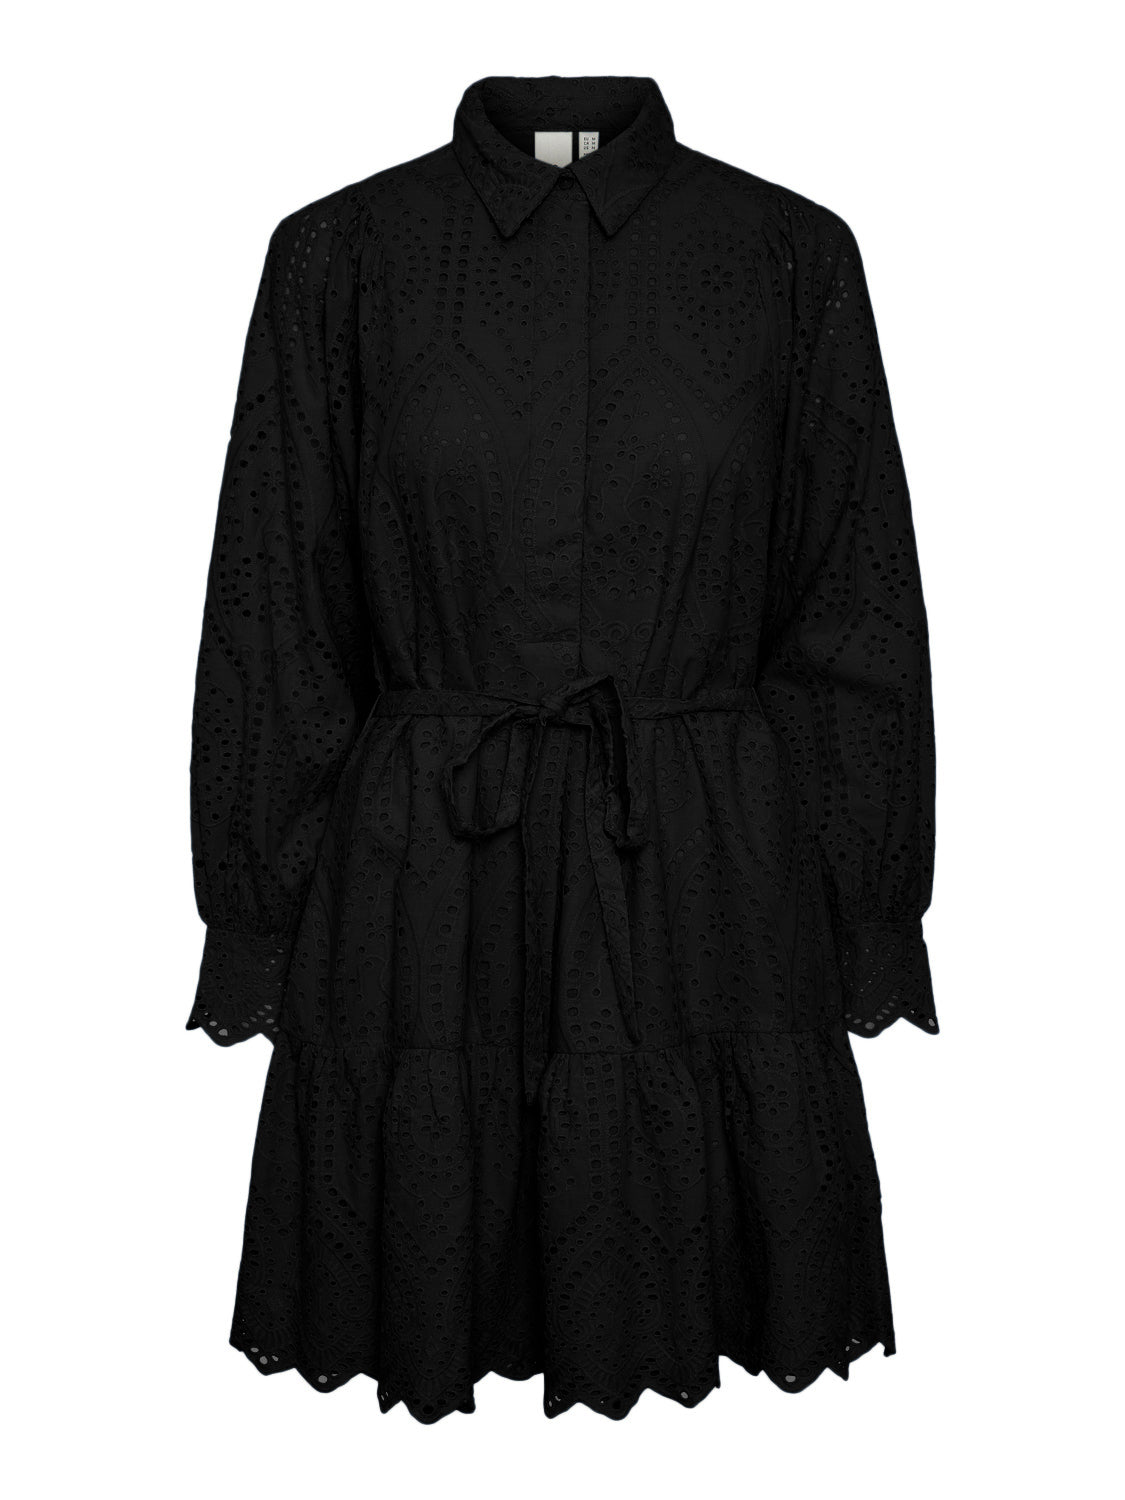 YASHOLI Dress - Black